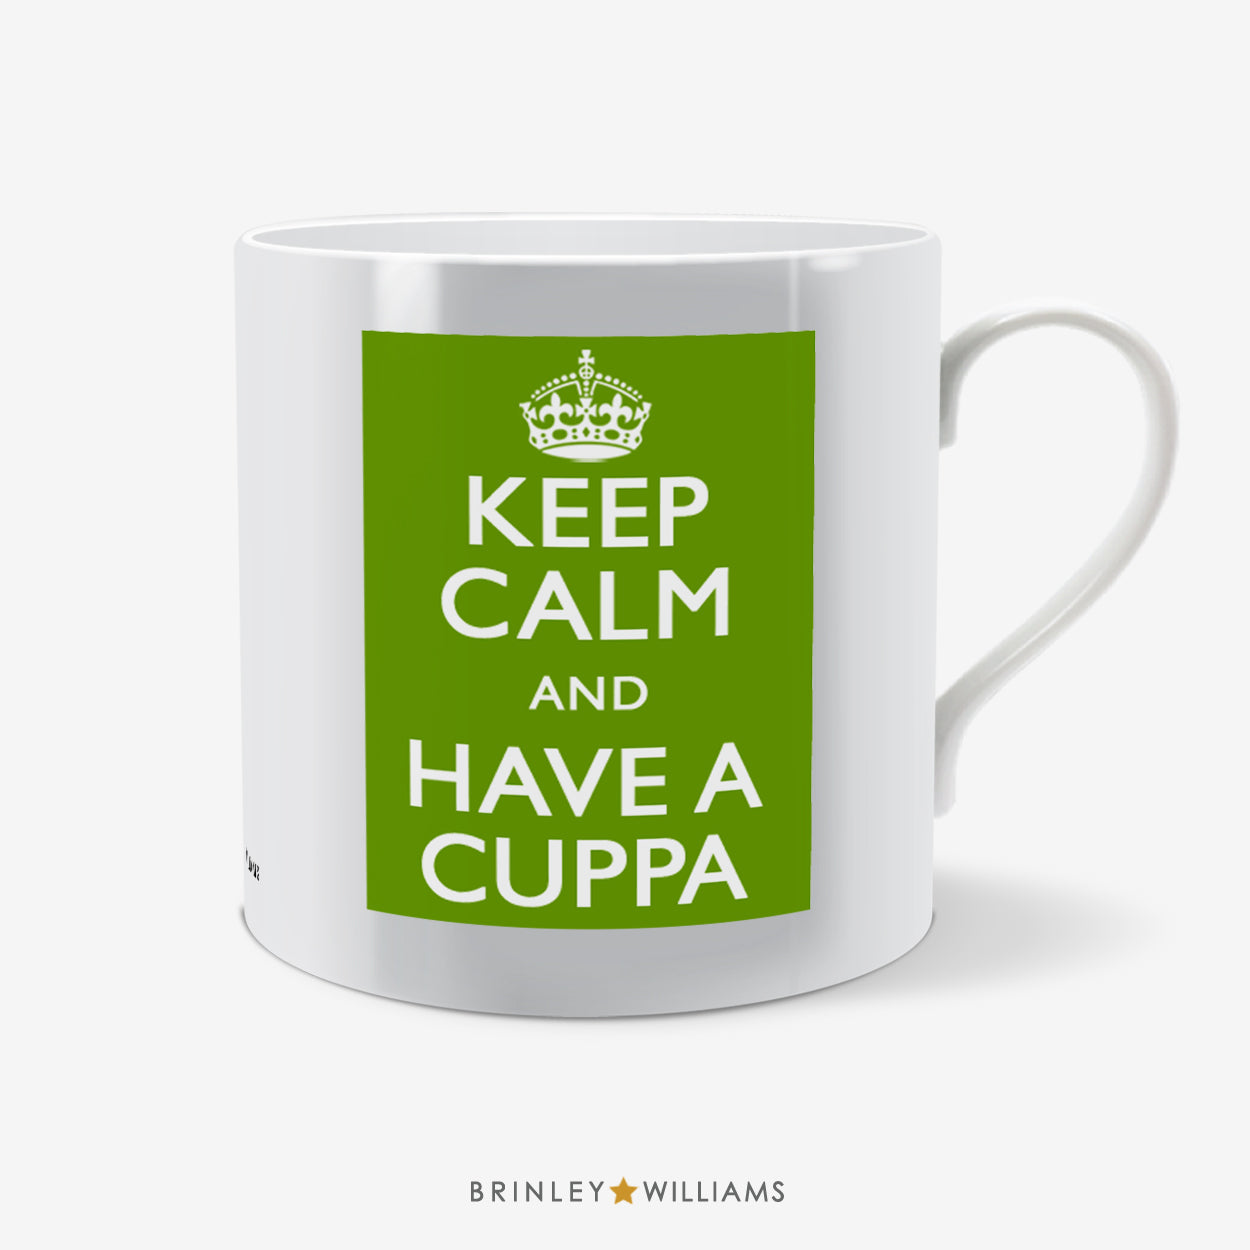 Keep Calm and have a Cuppa Fun Mug - Green